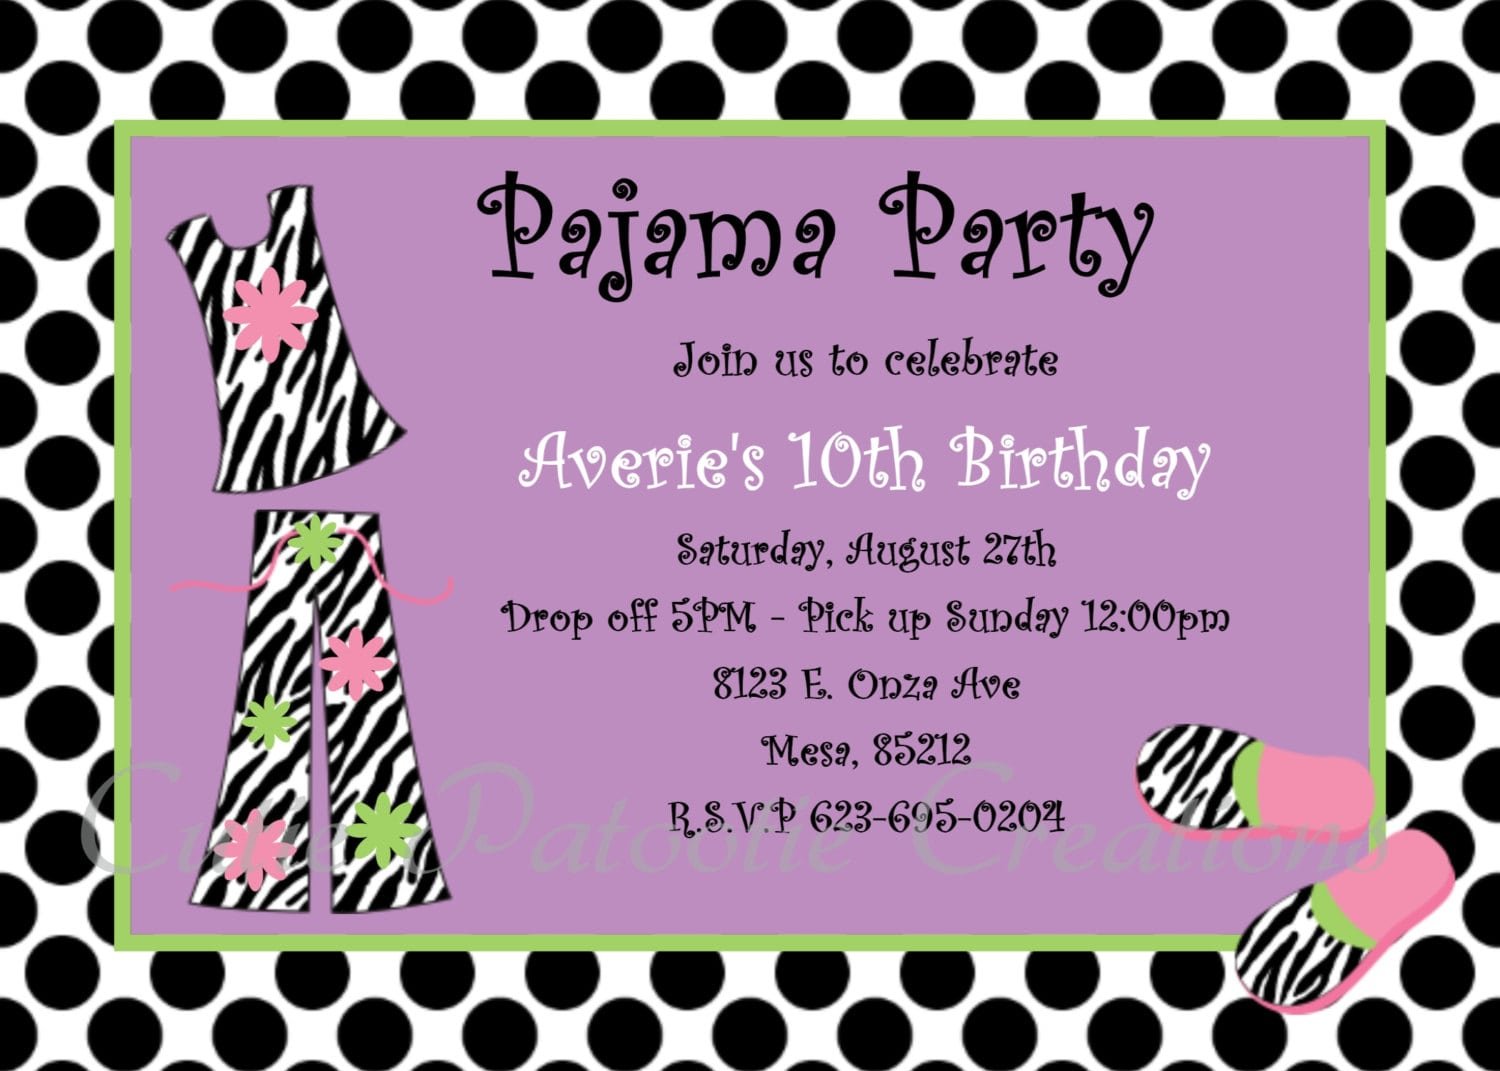 Pajama Party Invitations